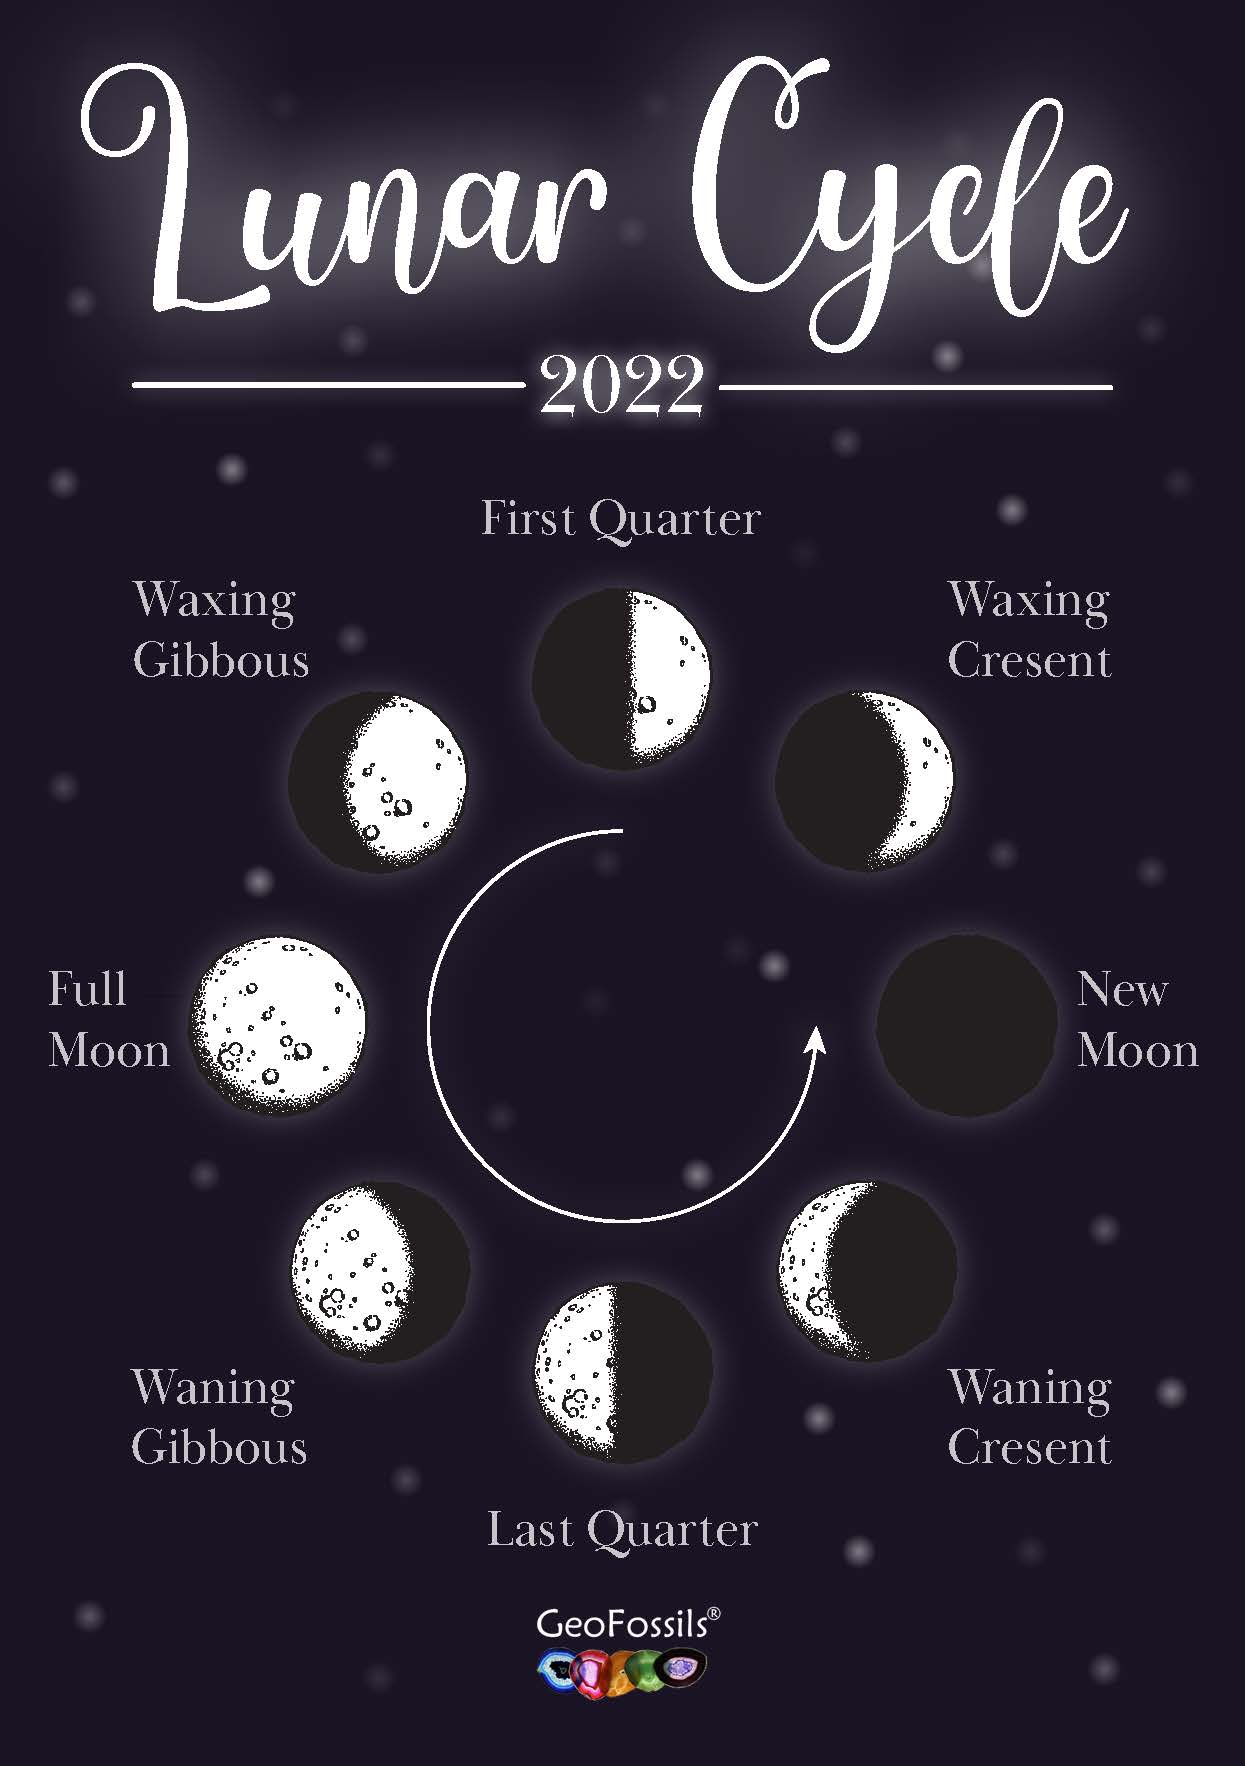 Lunar Cycle 2022 Information Card